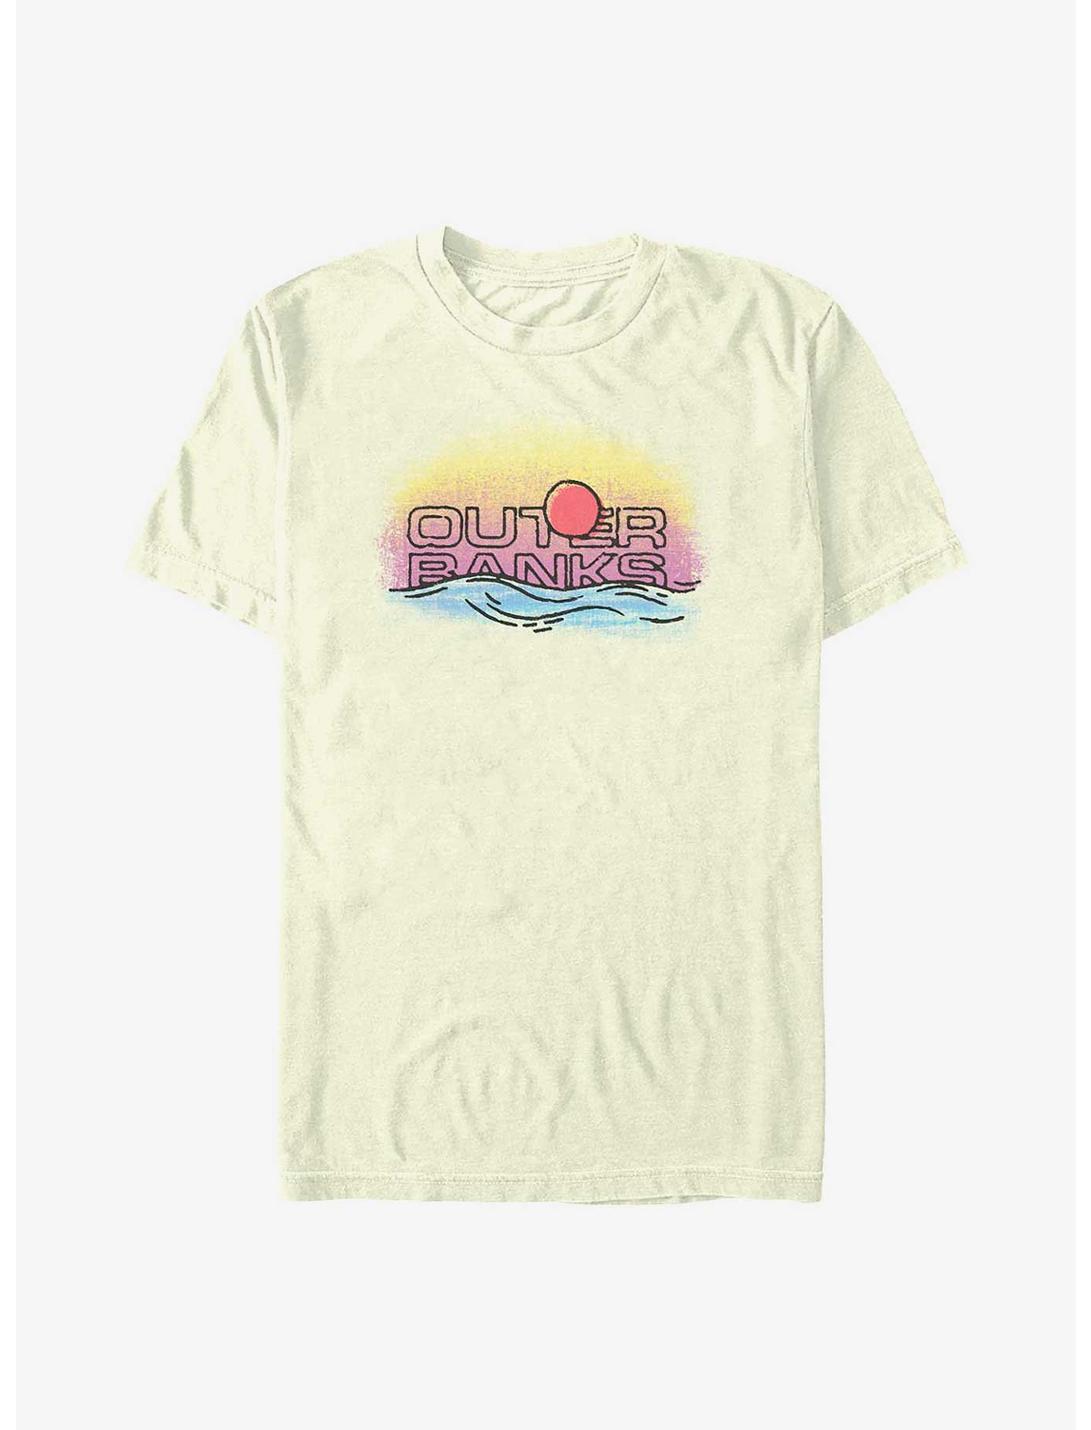 Outer Banks Sunset T-Shirt, NATURAL, hi-res